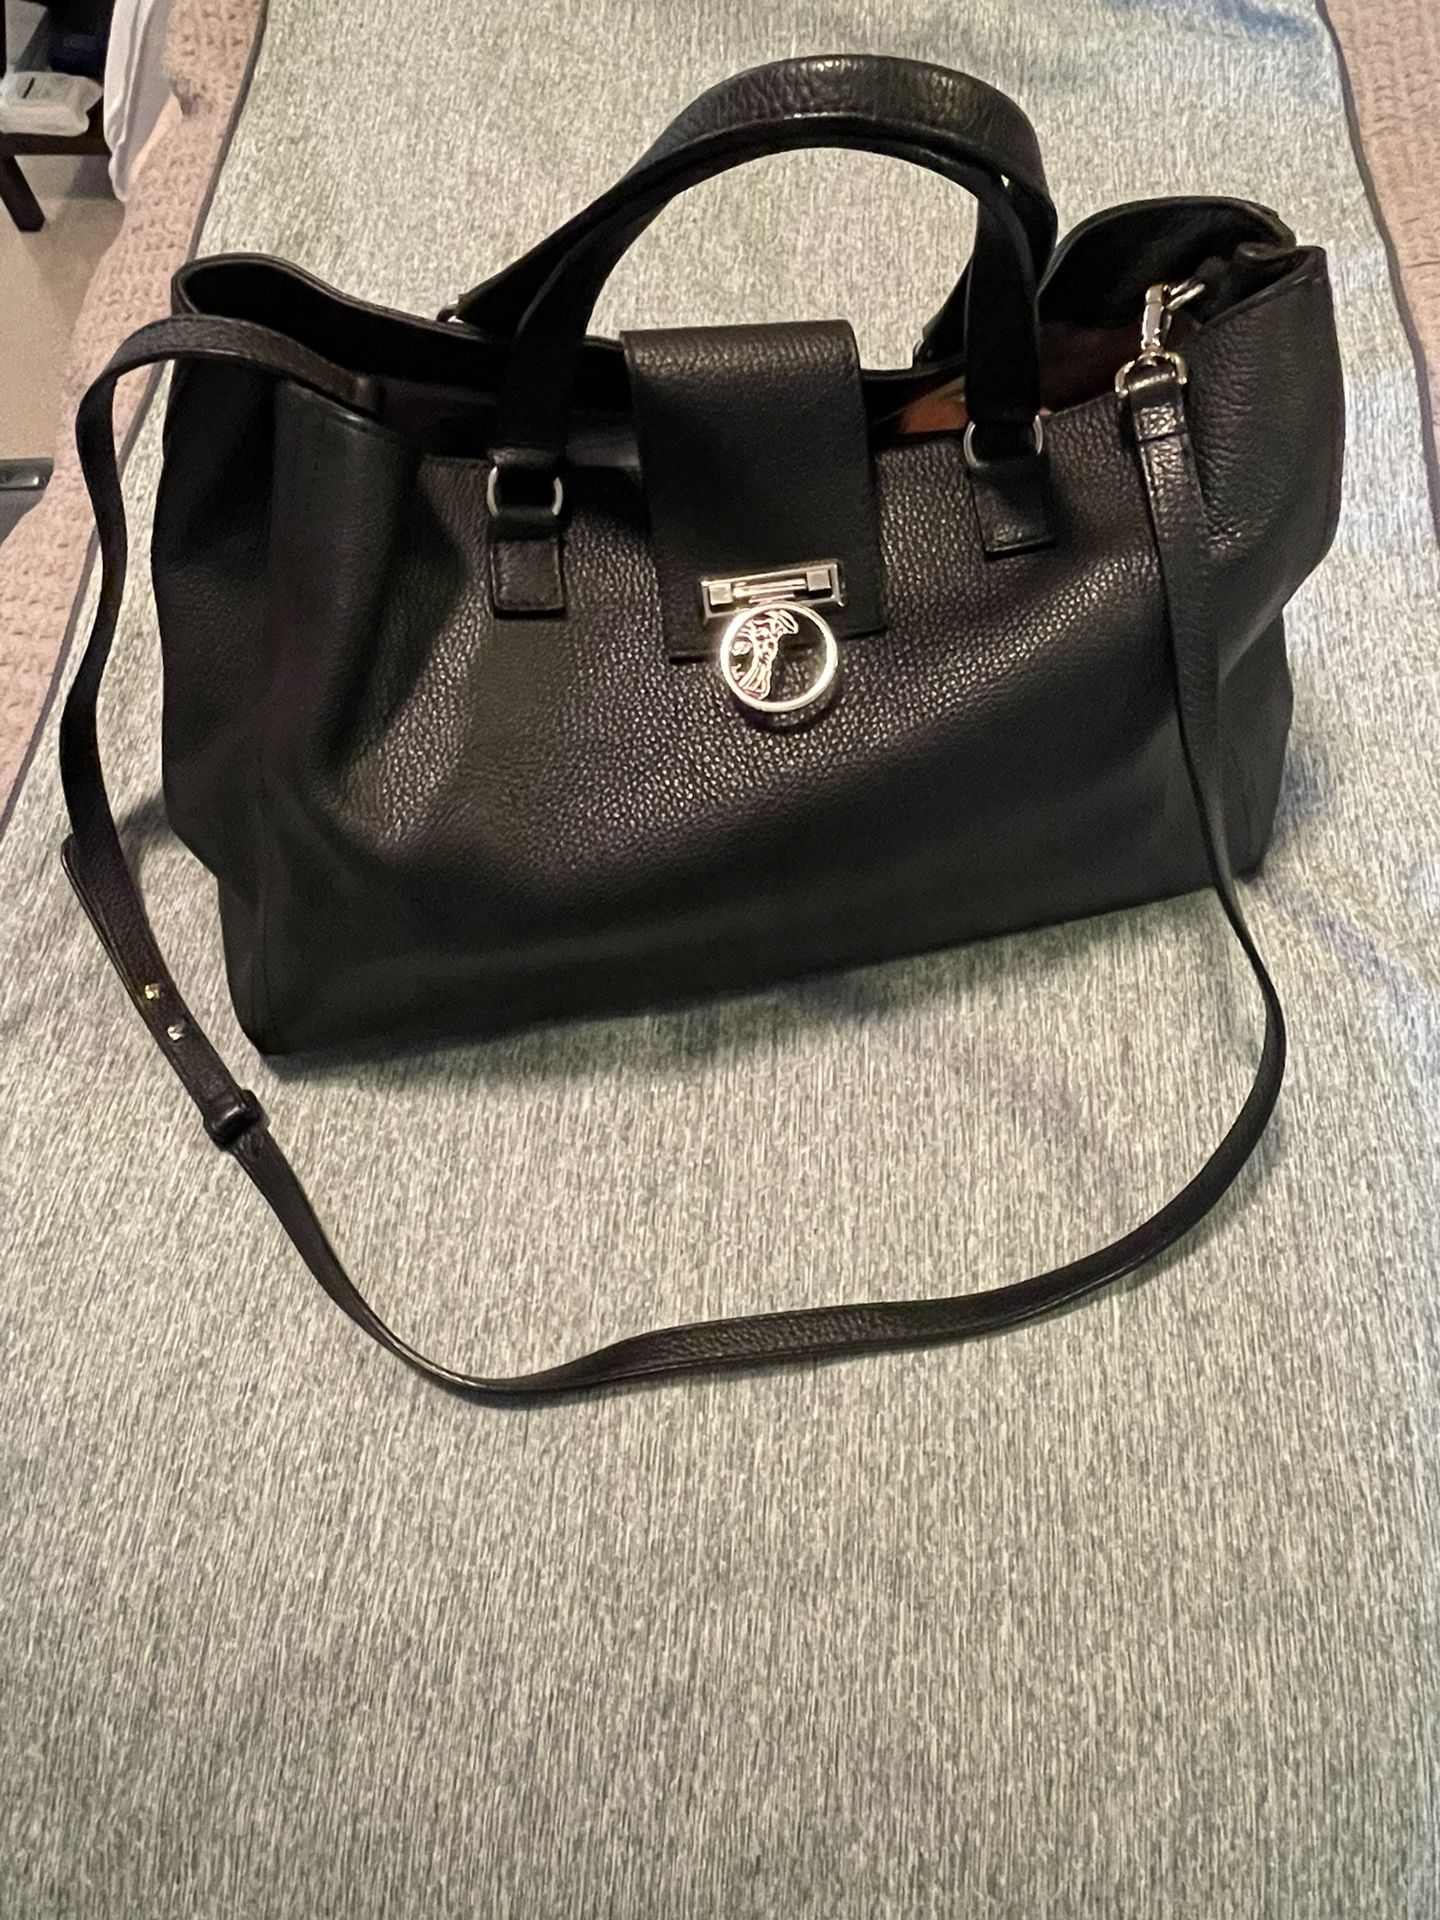 Versace Collection Black Leather Handbag